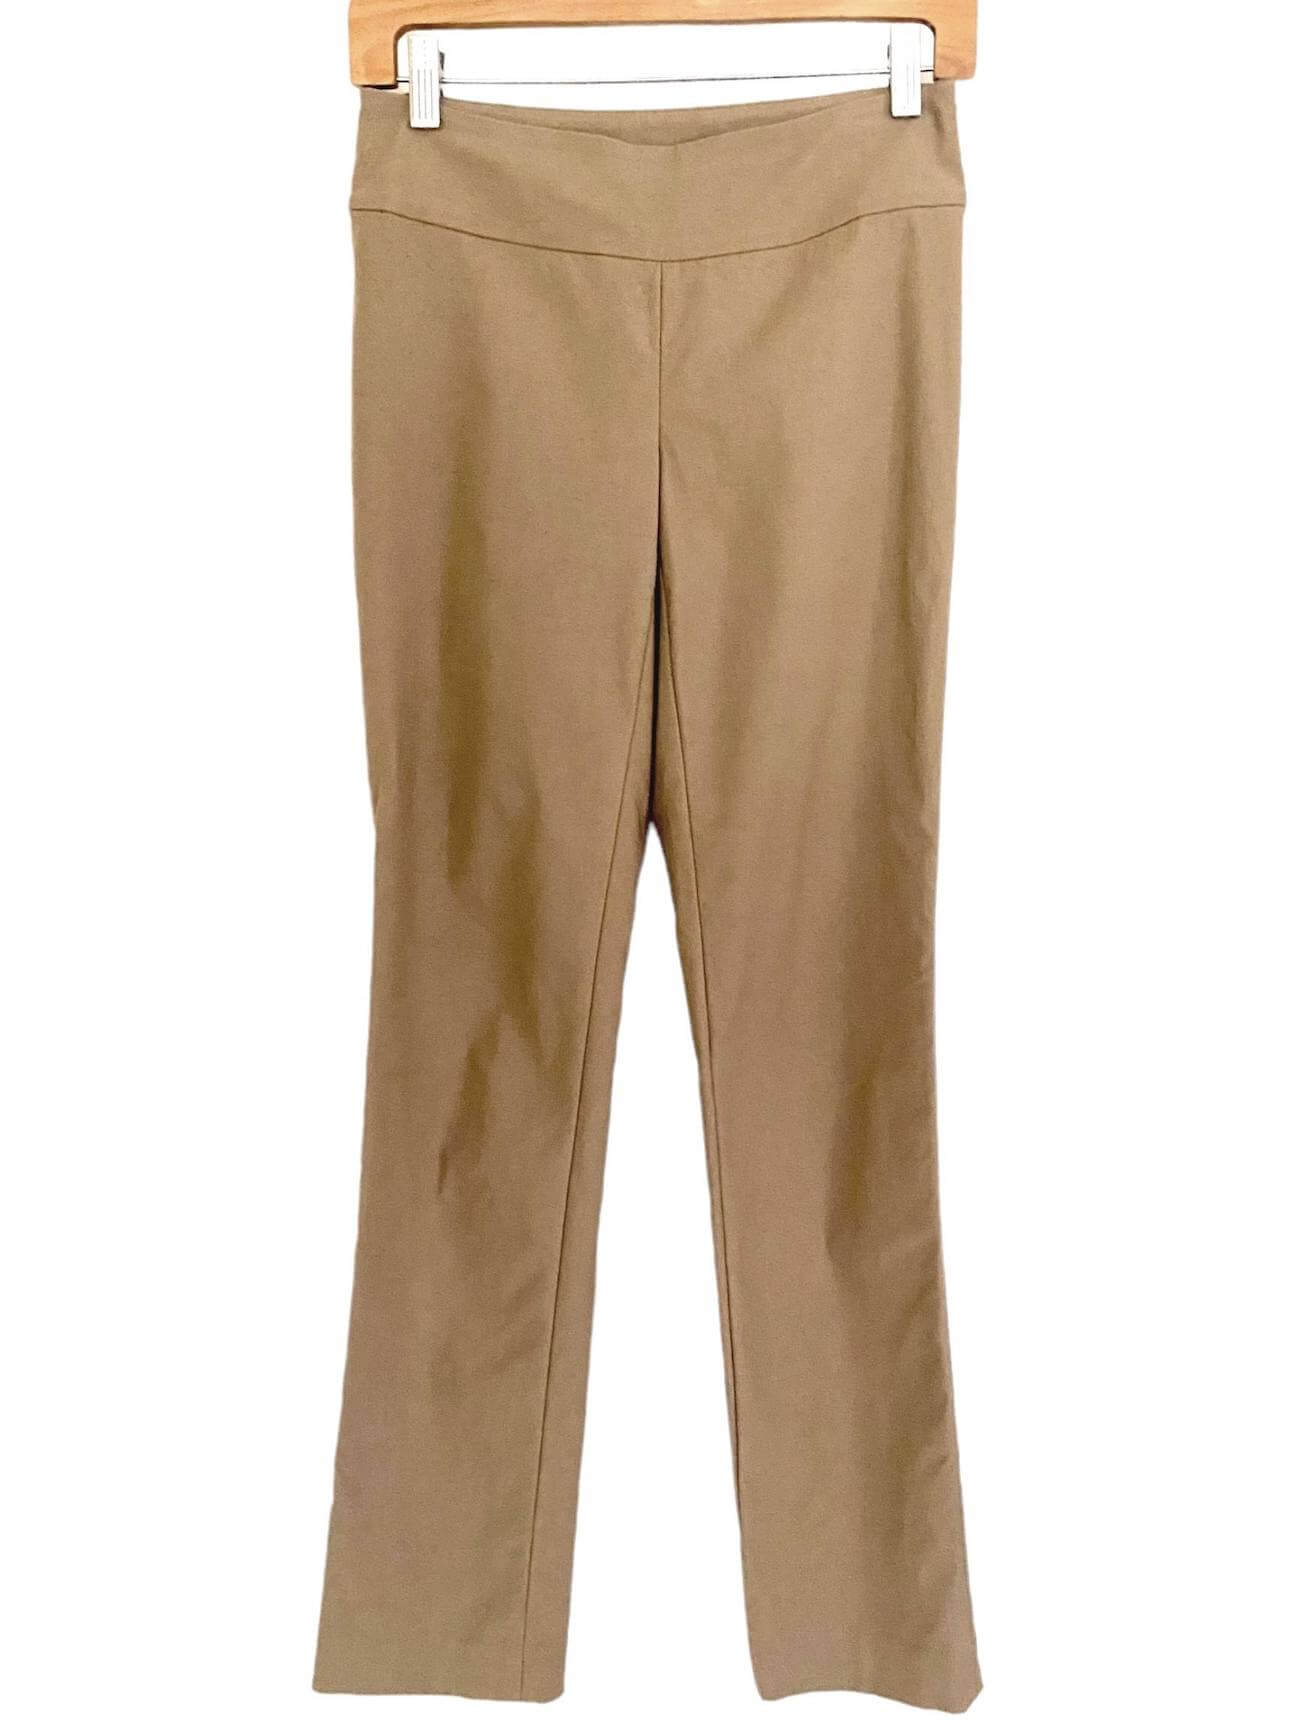 Buy Men Khaki Solid Slim Fit Trousers Online - 654415 | Van Heusen